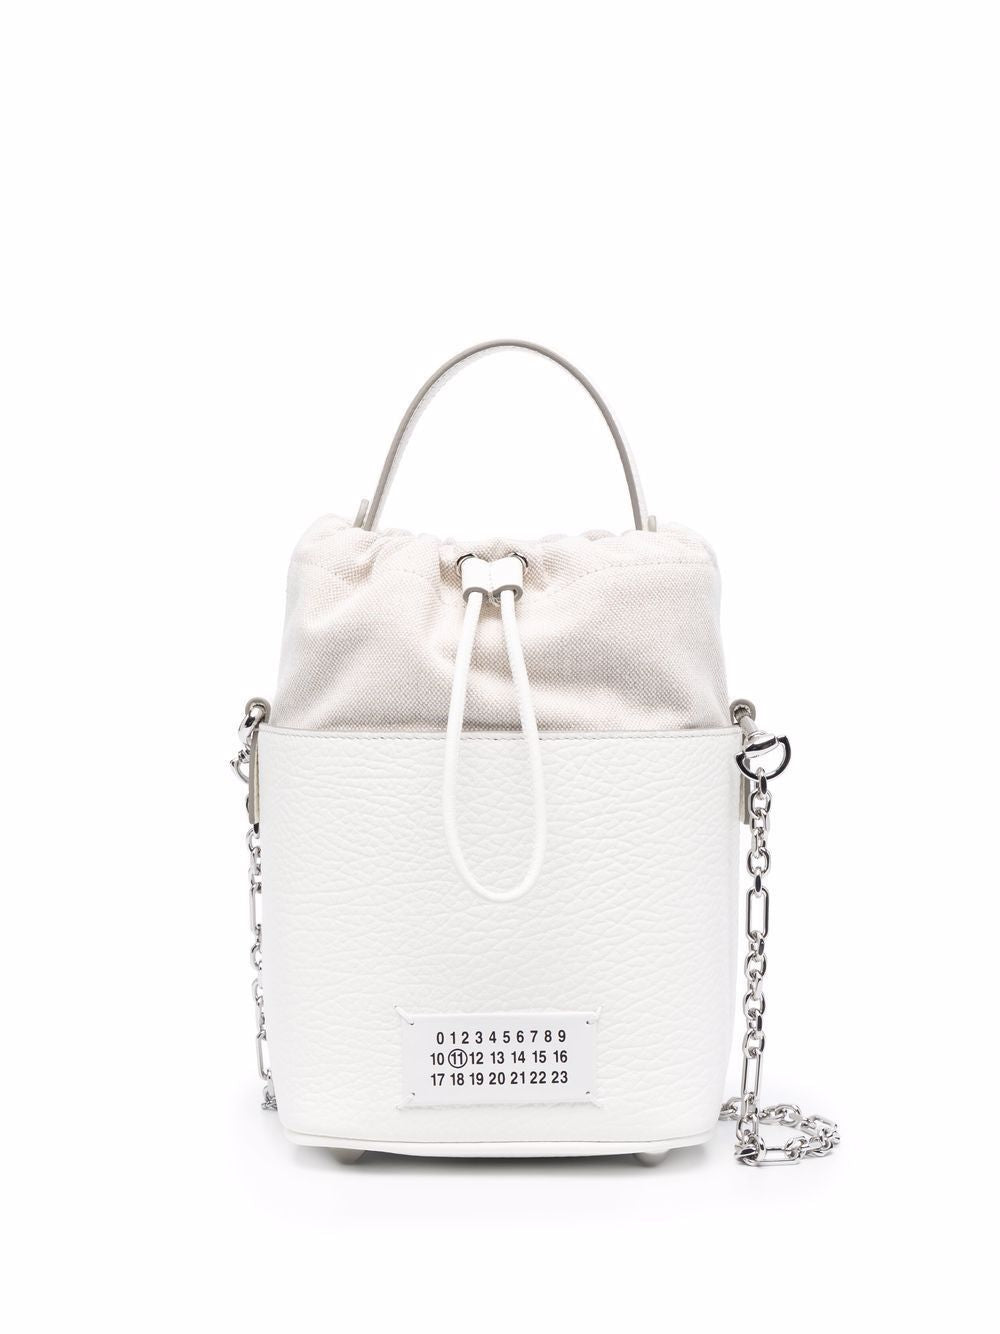 MAISON MARGIELA Chic Mini White Leather Bucket Shoulder Bag for Women - 15x23x12cm